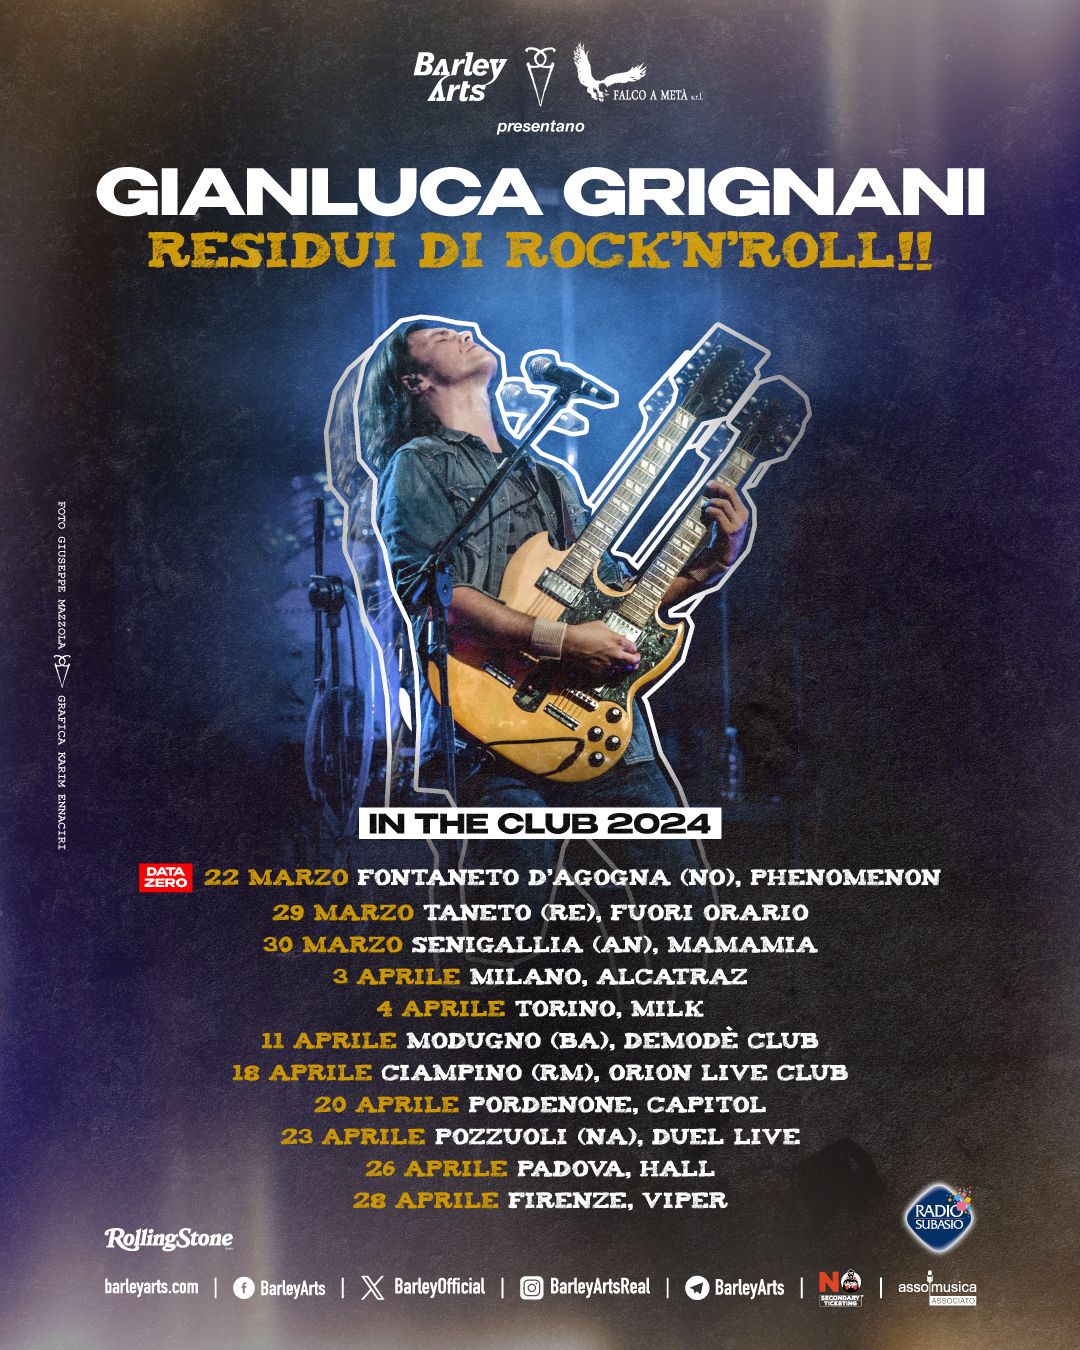 Gianluca Grignani: cresce l’attesa per Residui di rock’n’rool, il tour nei principali club italiani